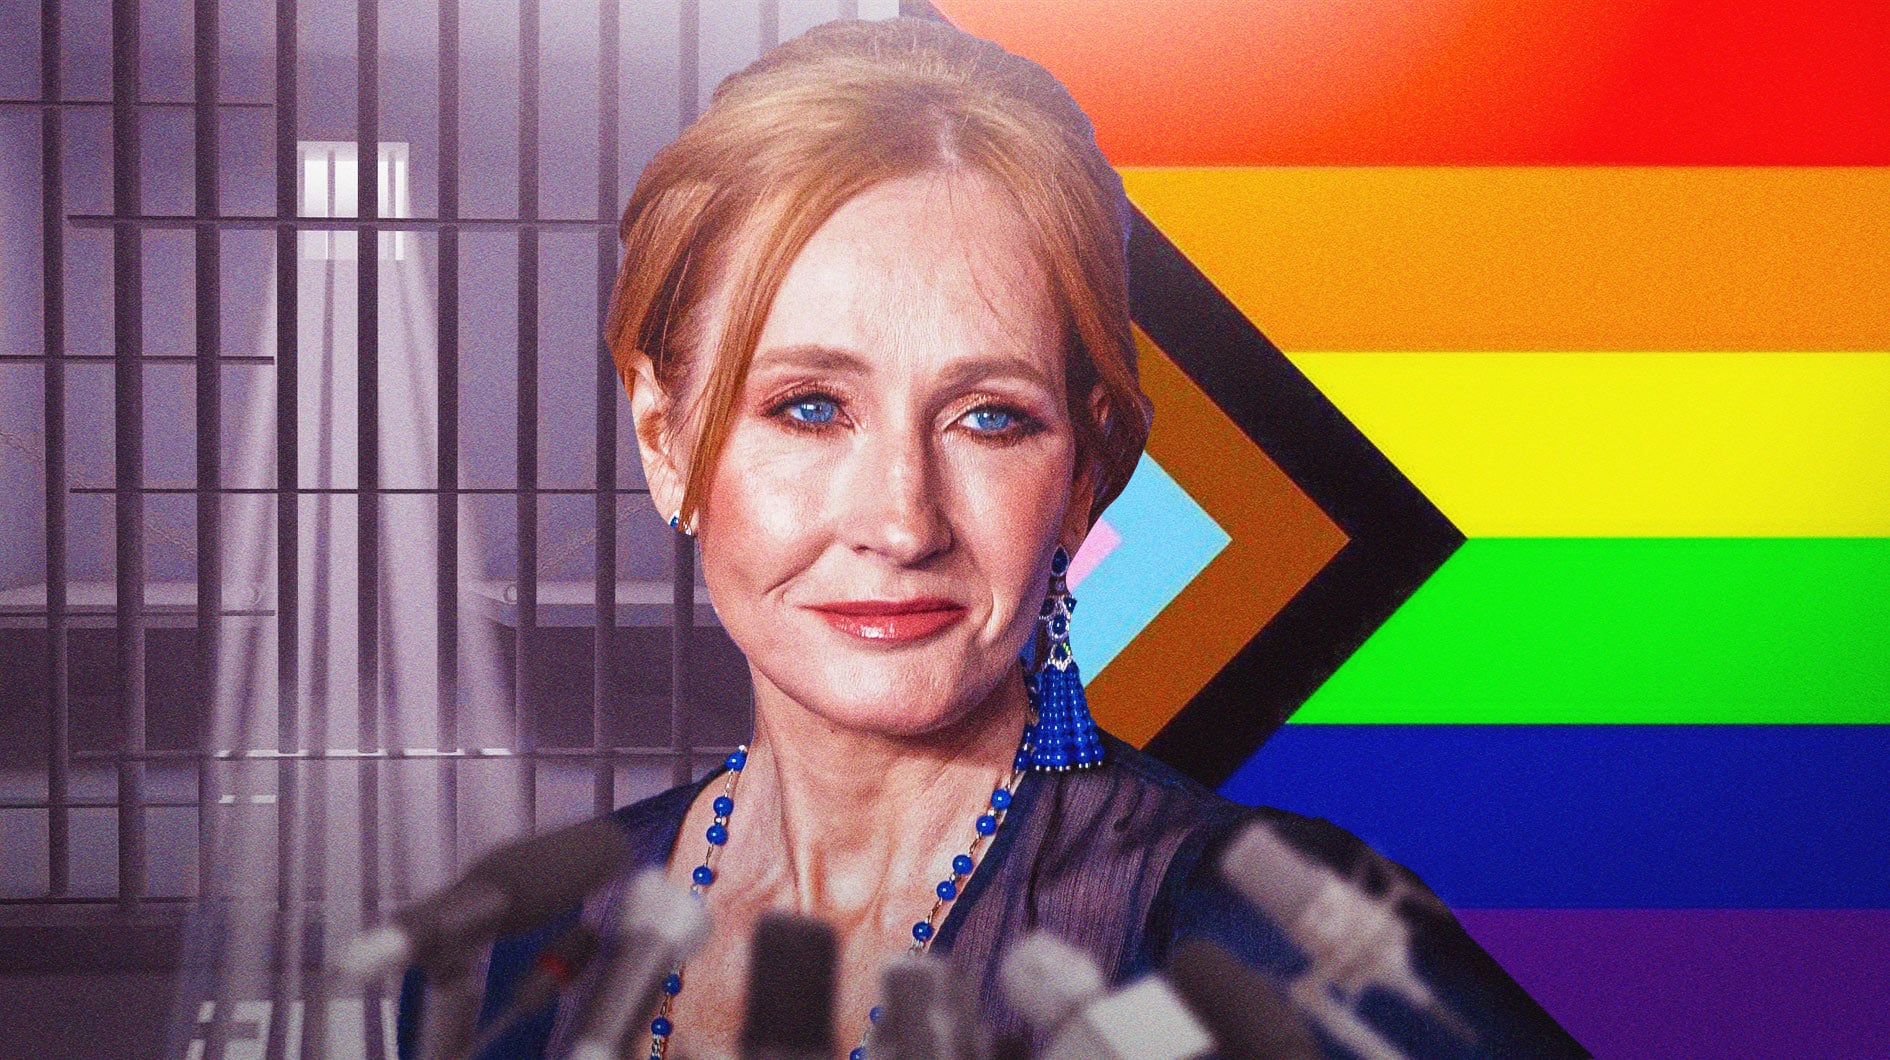 J.K. Rowling on whether prison time or change transgender views